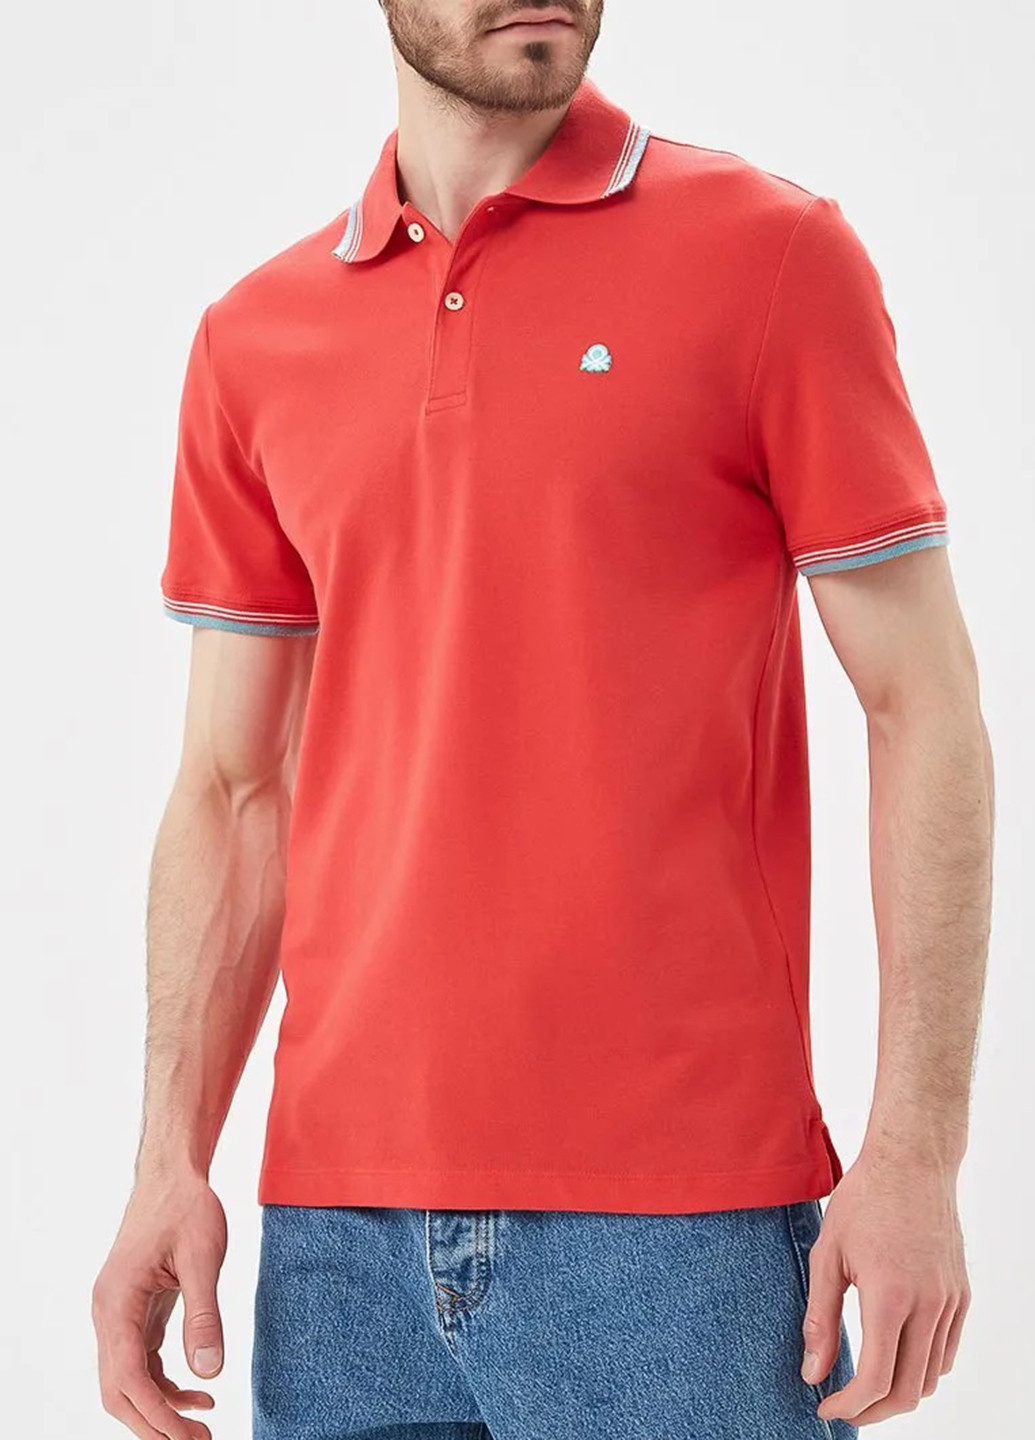 Красная футболка-поло для мужчин United Colors of Benetton однотонная